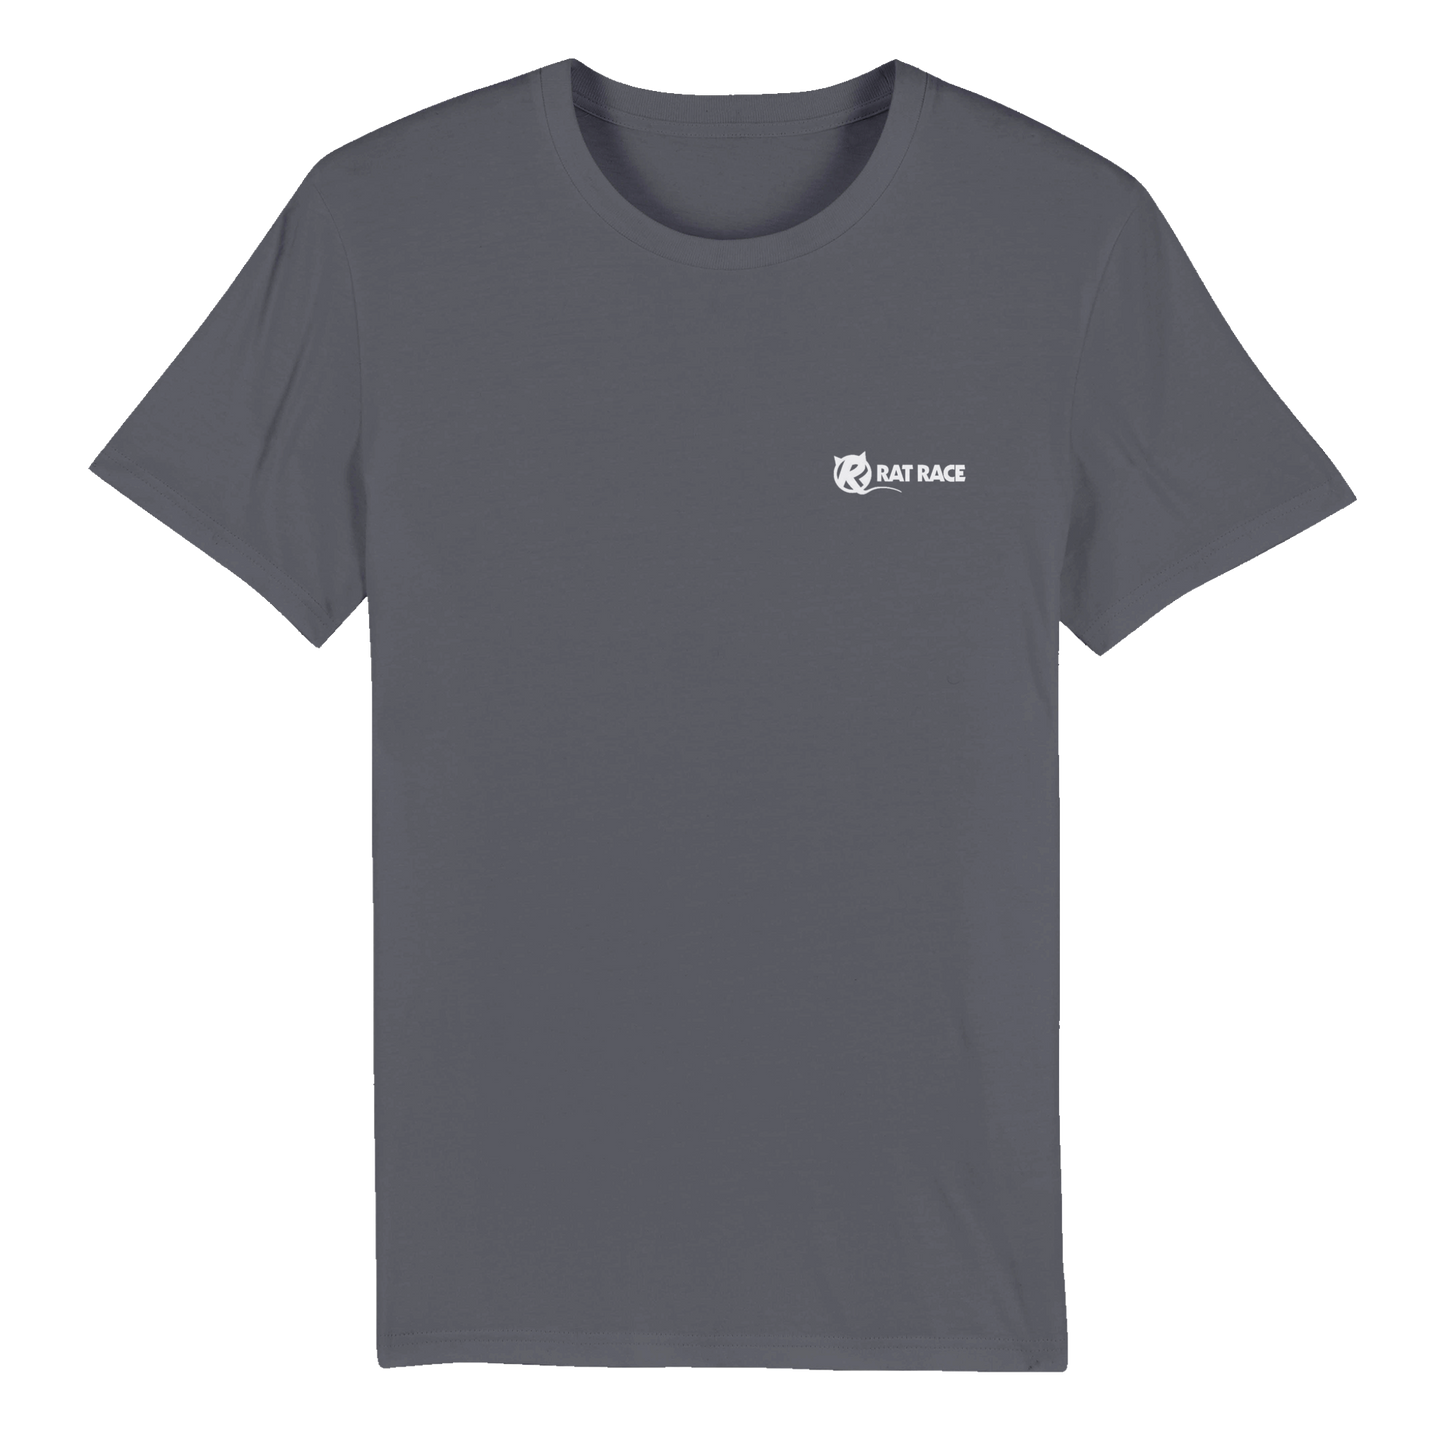 Rat Race Mongol 100 Organic Unisex Crewneck T-shirt - Grey